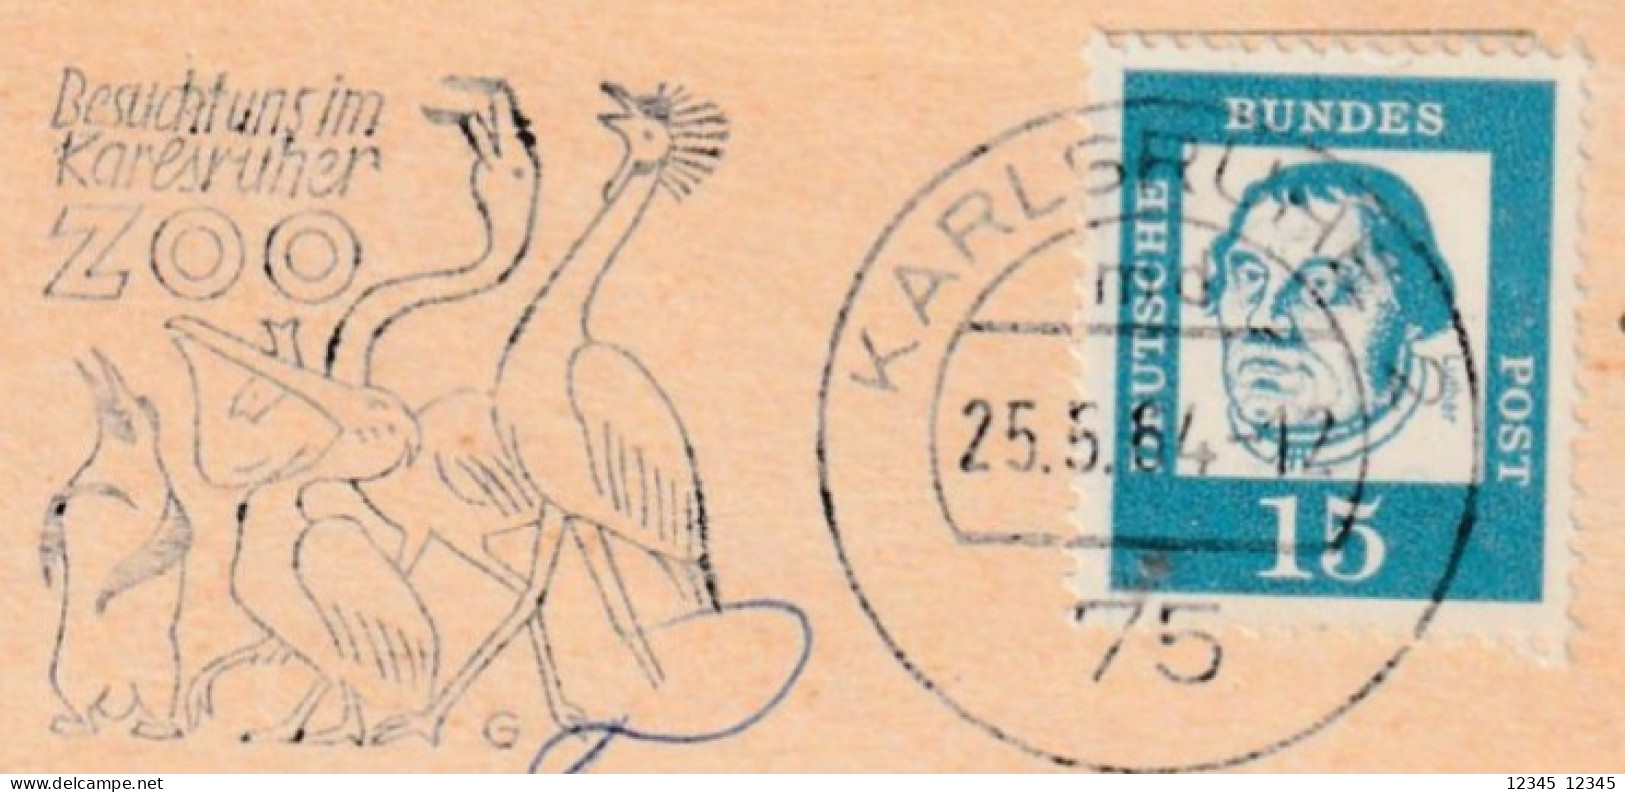 Duitsland 1964, Stamped Bird Motive (Besucht Uns Im Karlsruher Zoo) - Storia Postale